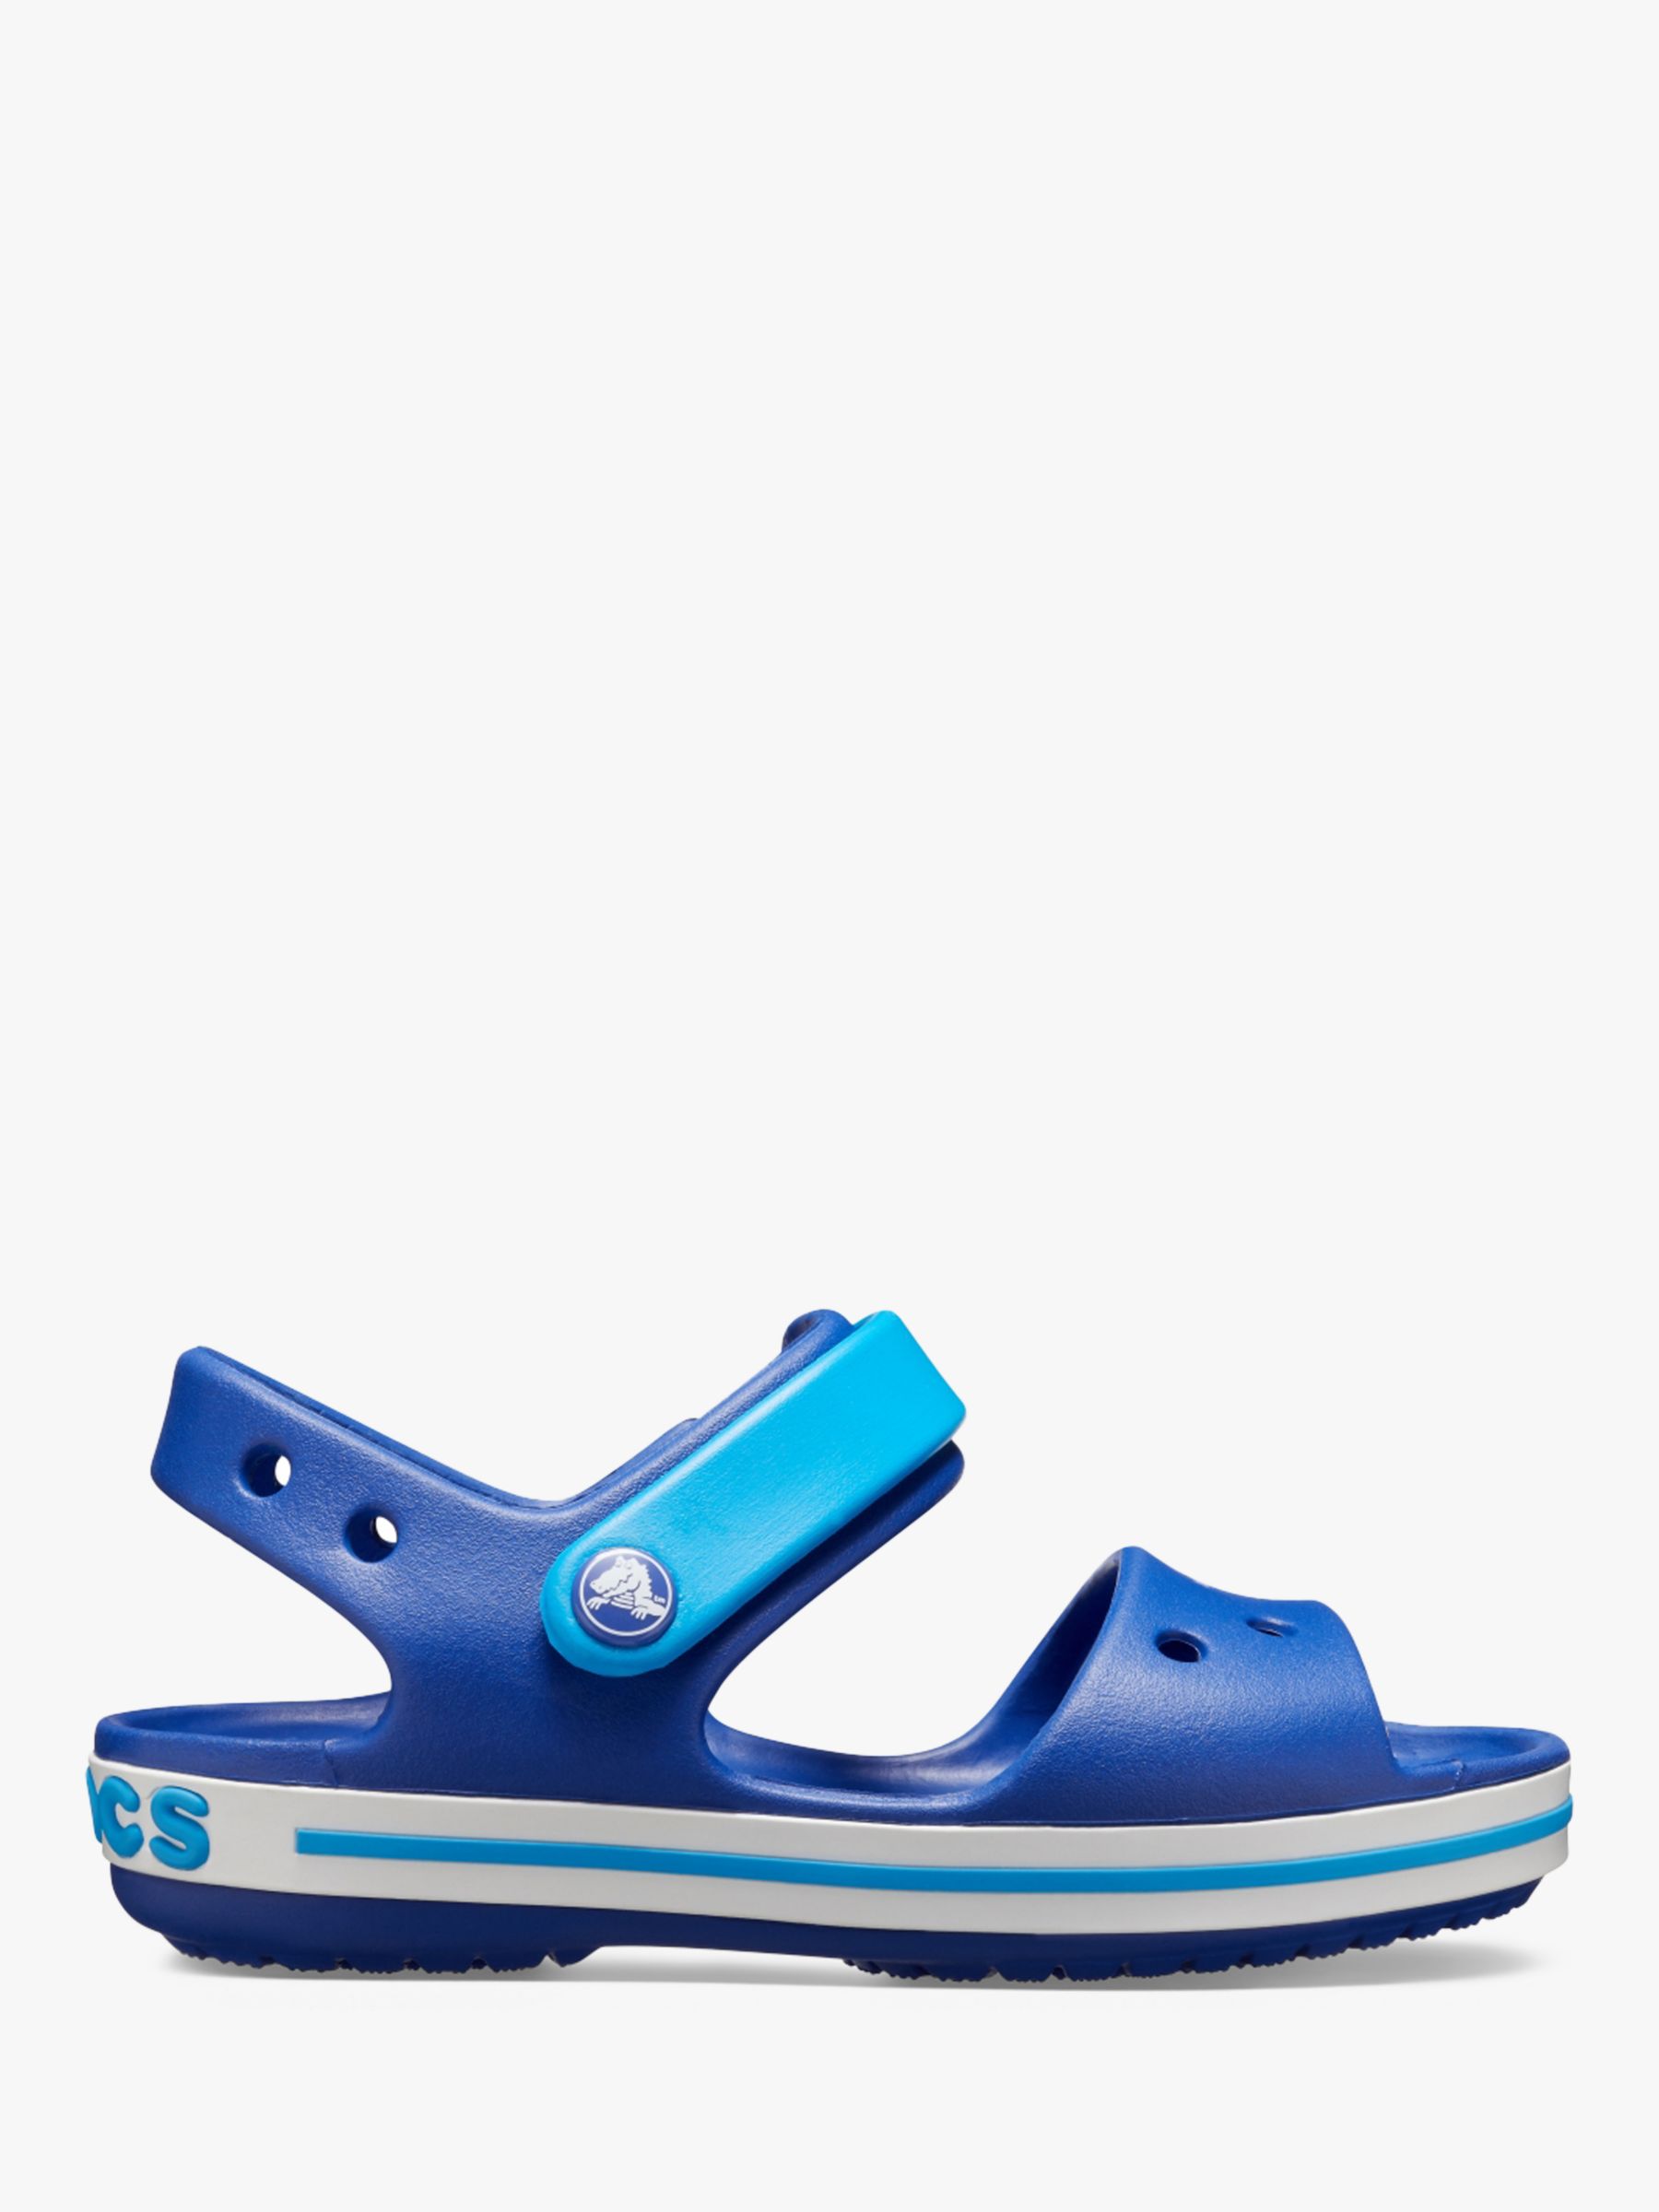 Crocs Kids' Crocband Sandals, Cerulean Blue/Ocean, 5 Jnr